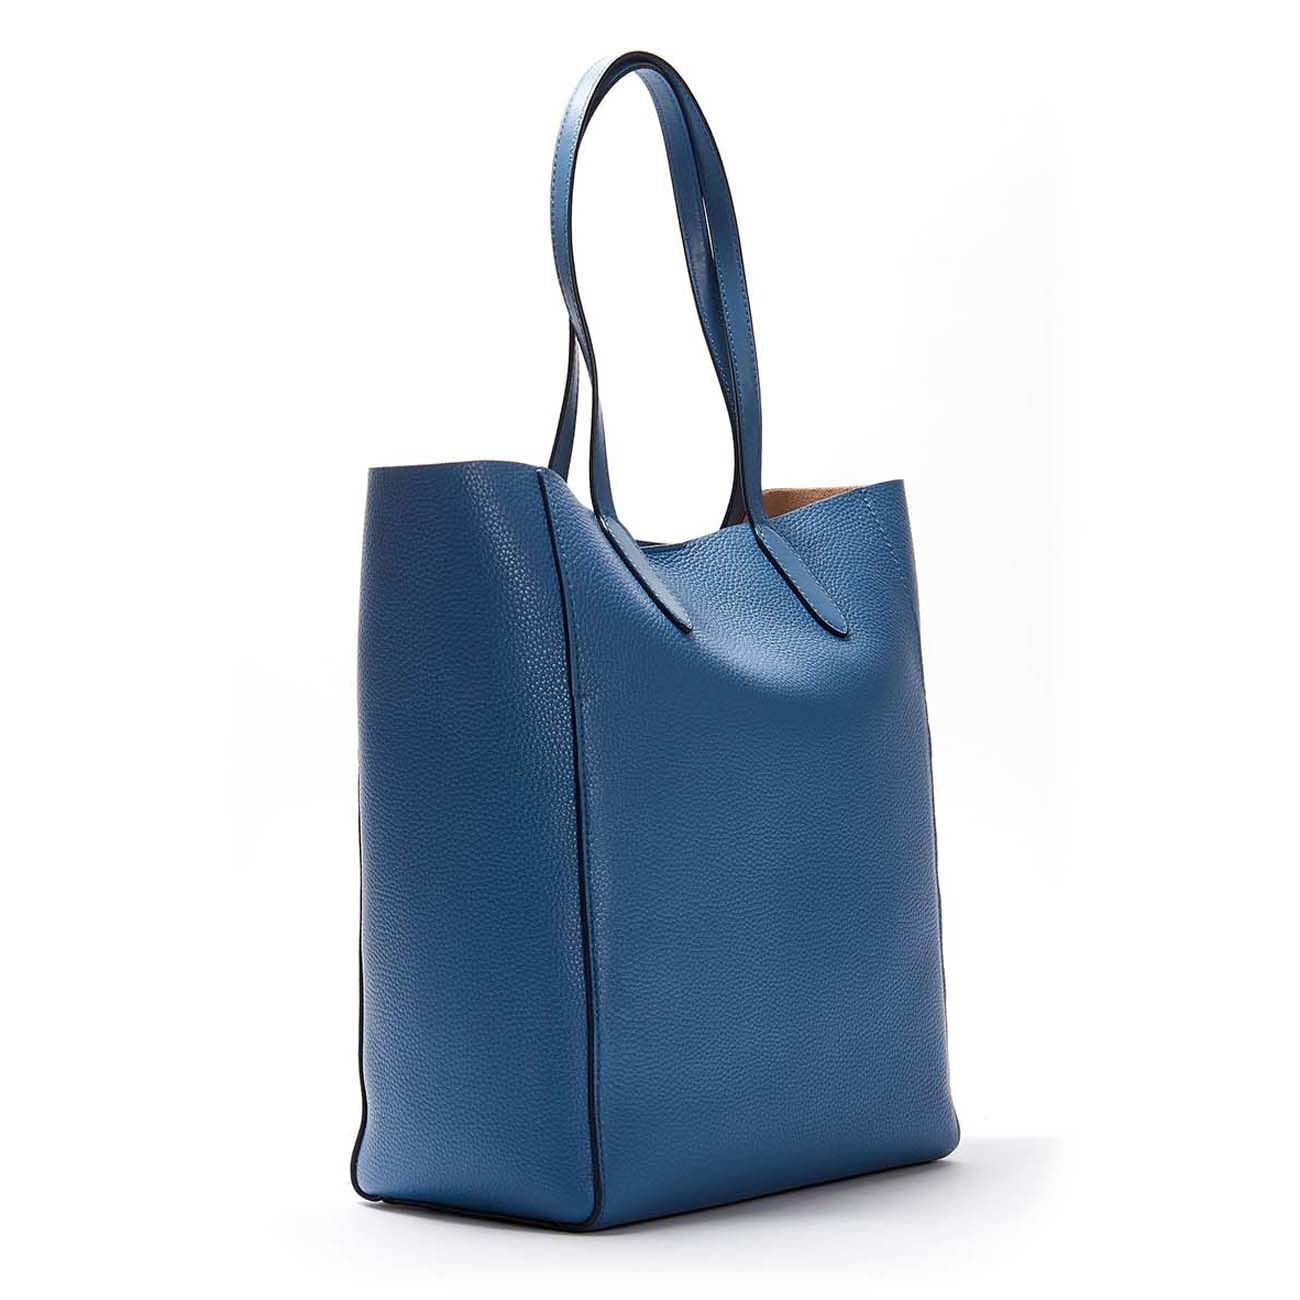 Michael Kors Tina Large Top Zip Handbag Tote Pale Blue (35S8ST4T3L)